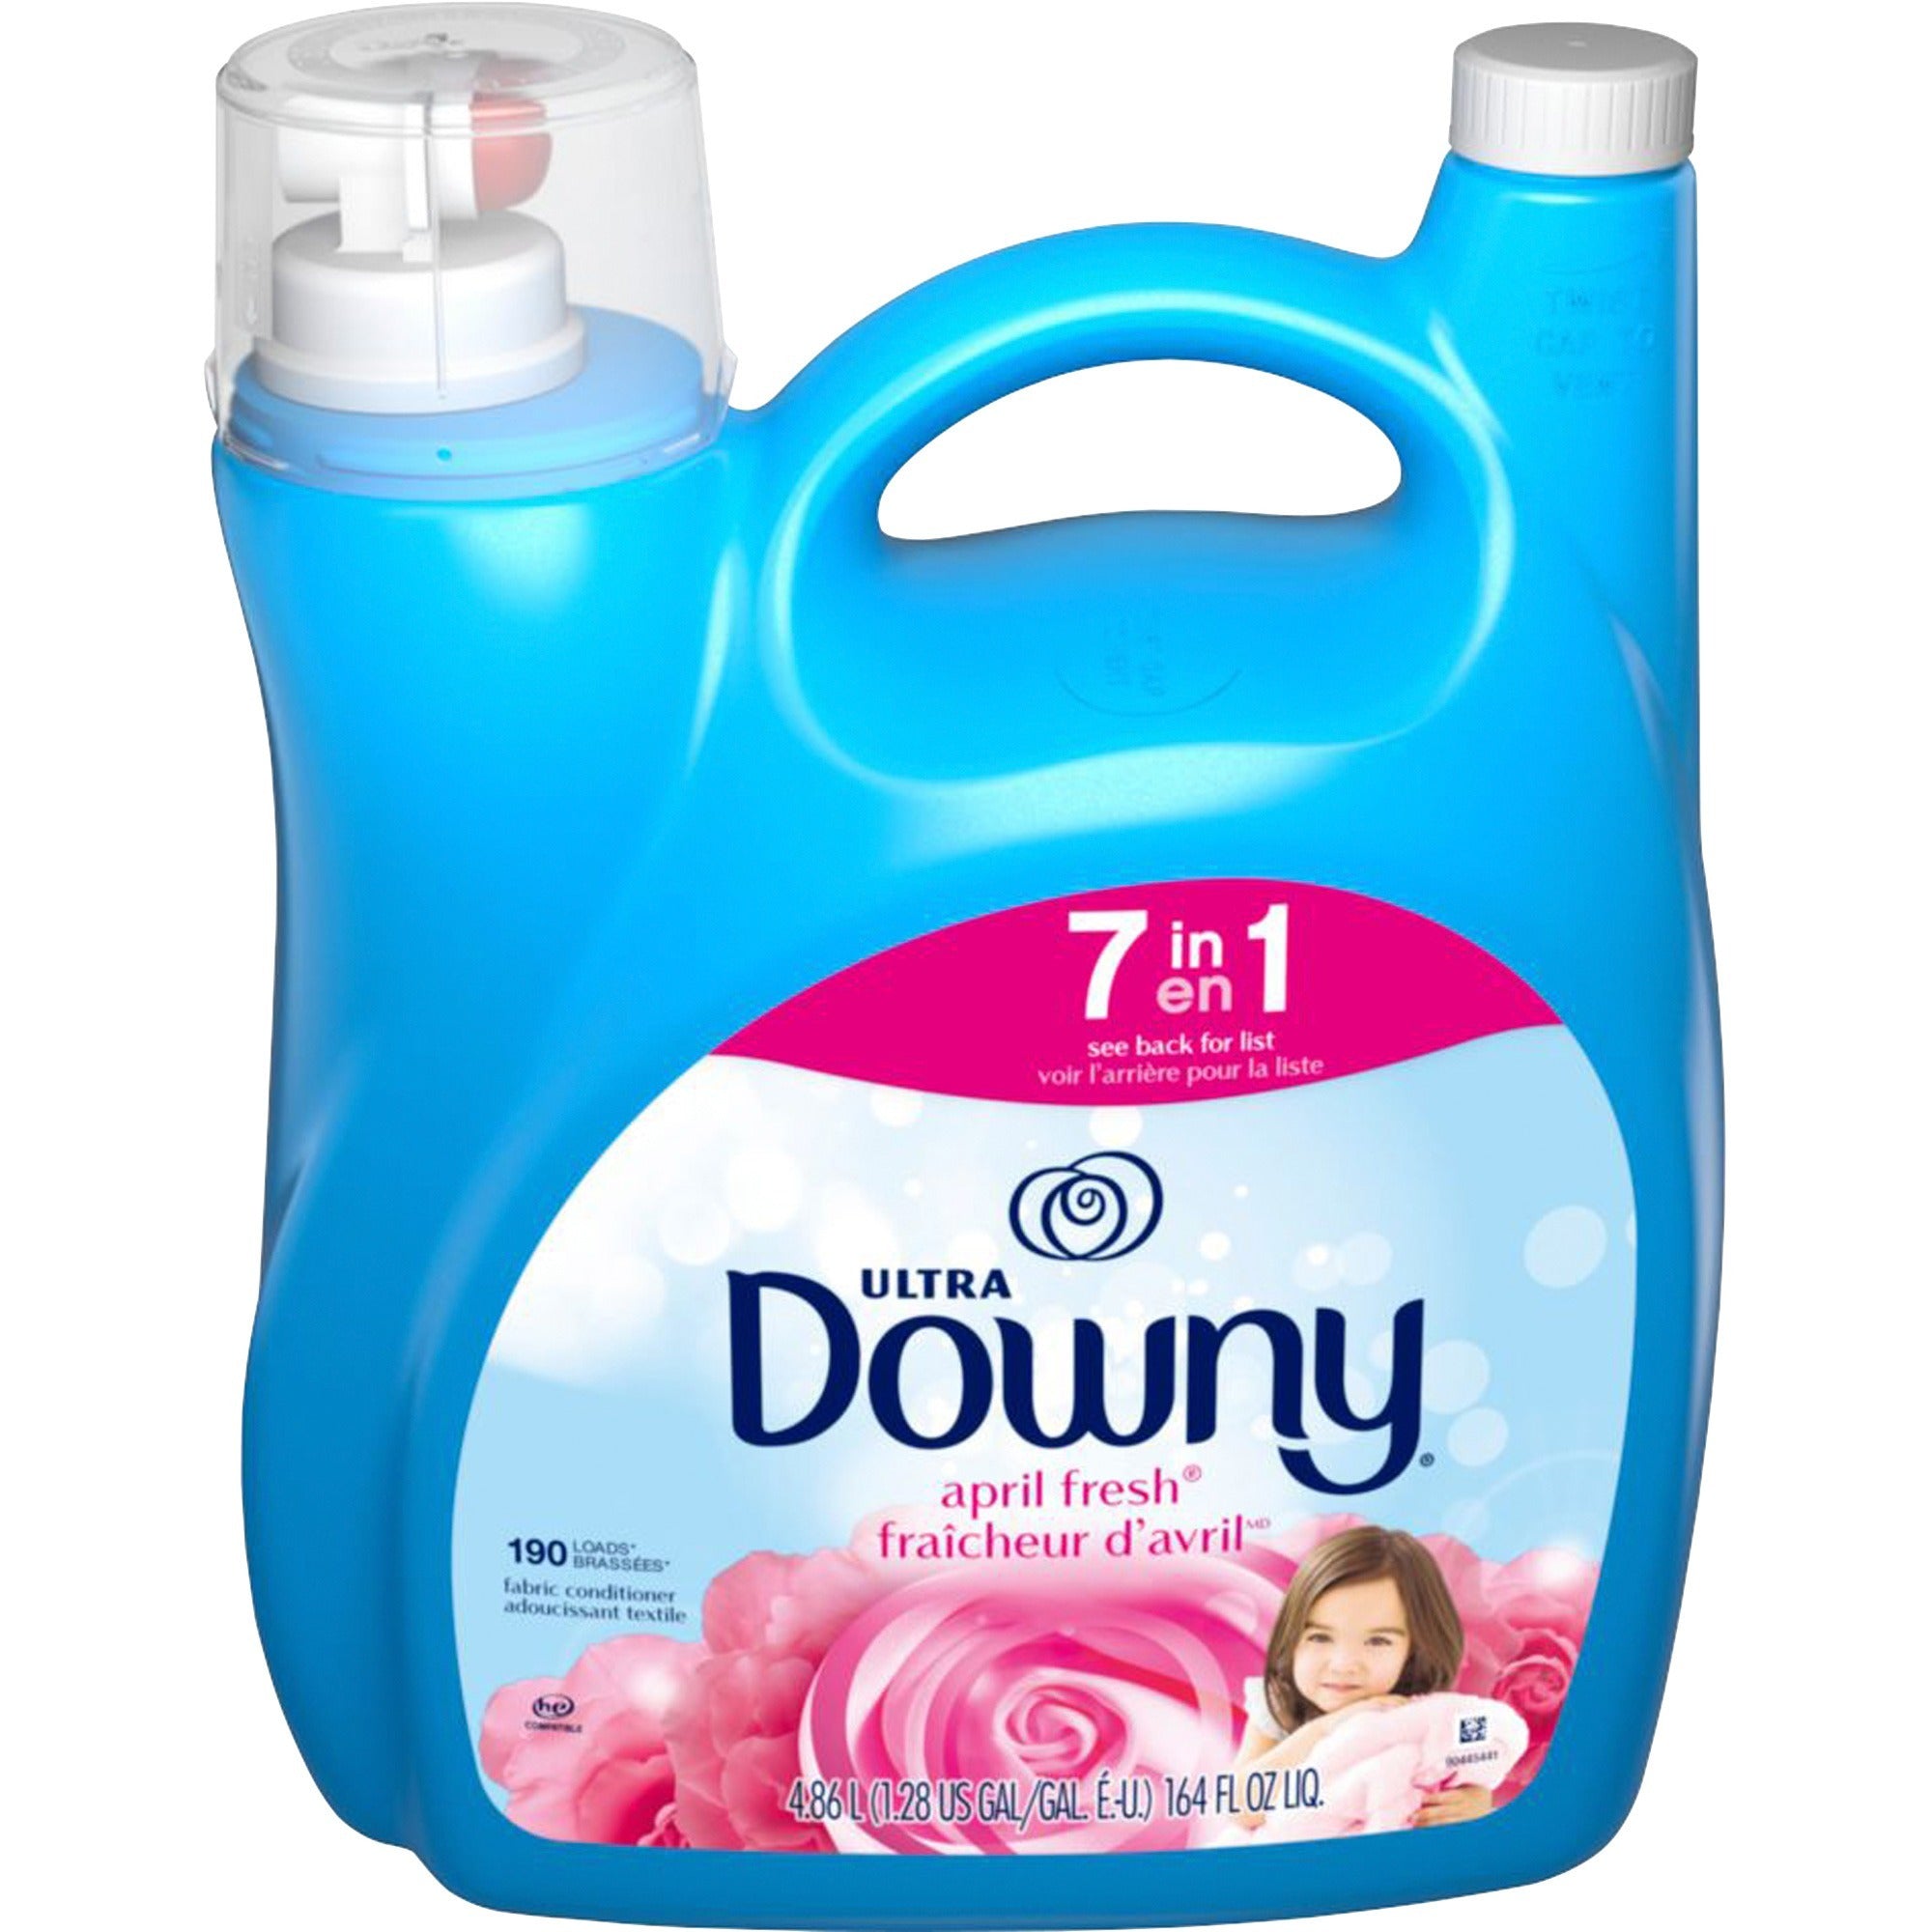 Downy April Fresh Fabric Softener - April Fresh, Floral ScentBottle - 1 Bottle - Pleasant Scent - Blue